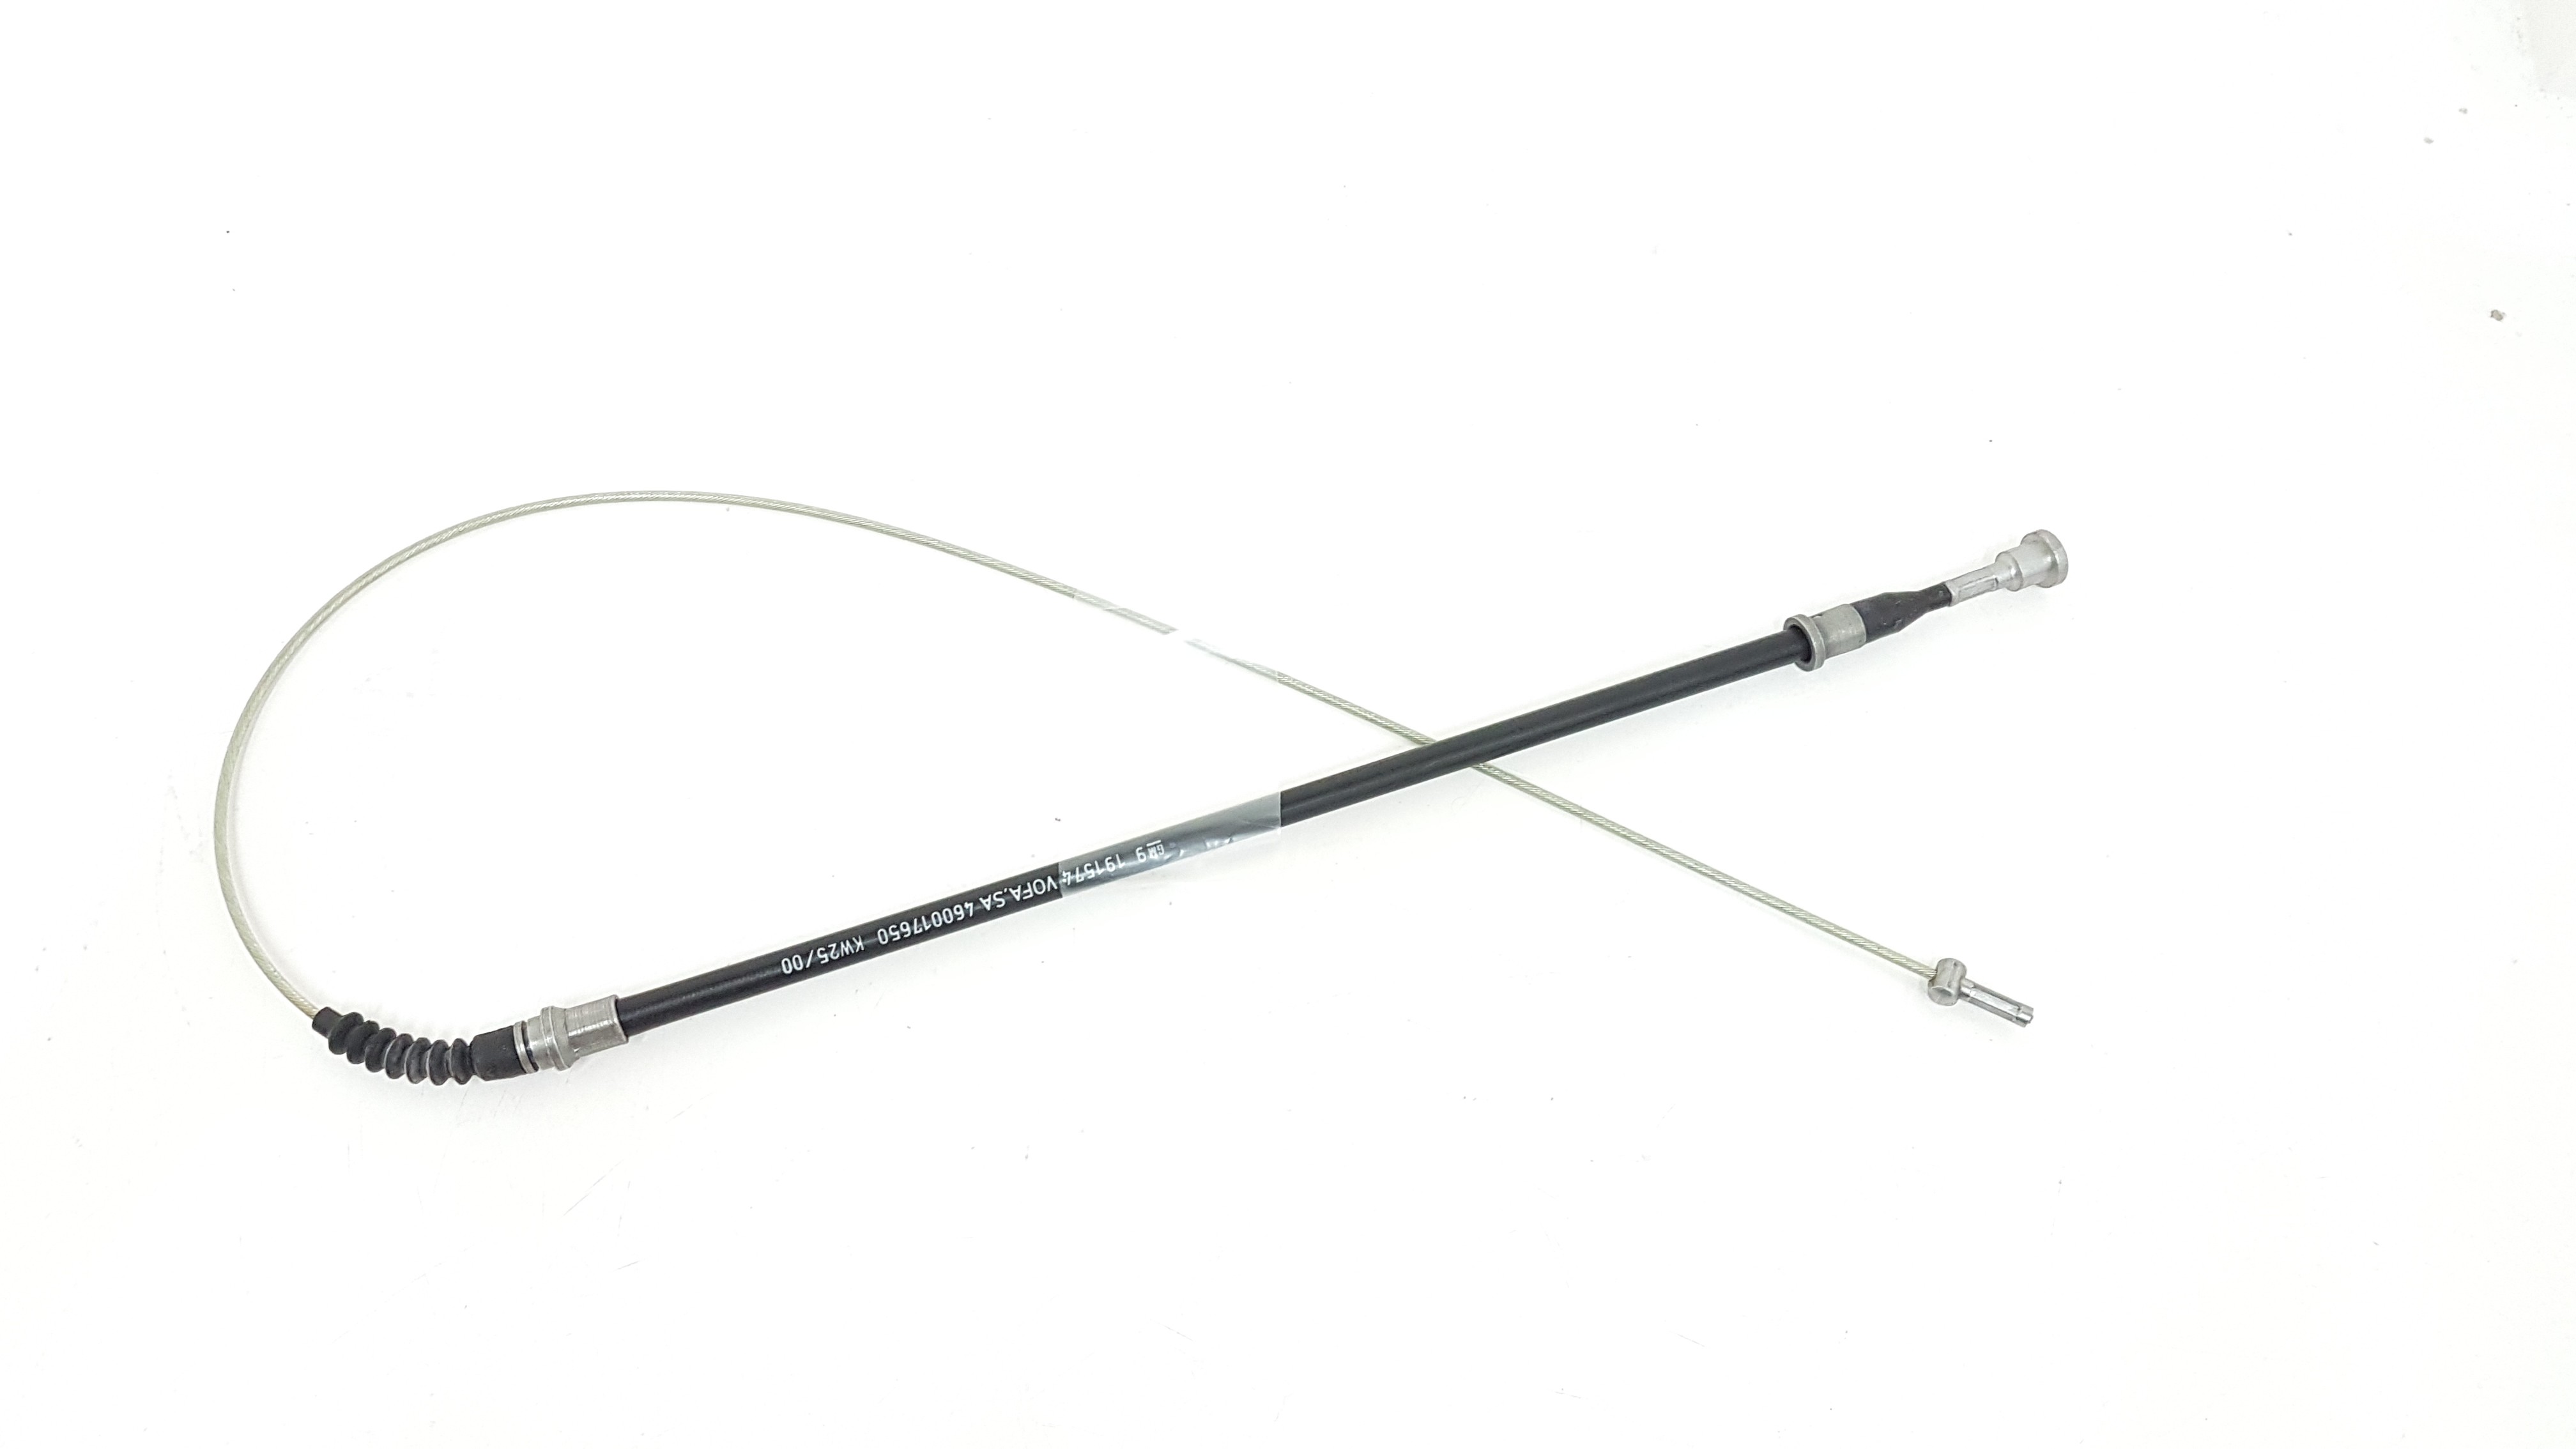 Handbrake Cable fits VAUXHALL CORSA C 1.8 Rear Left 00 to 06 Z18XE Hand Brake